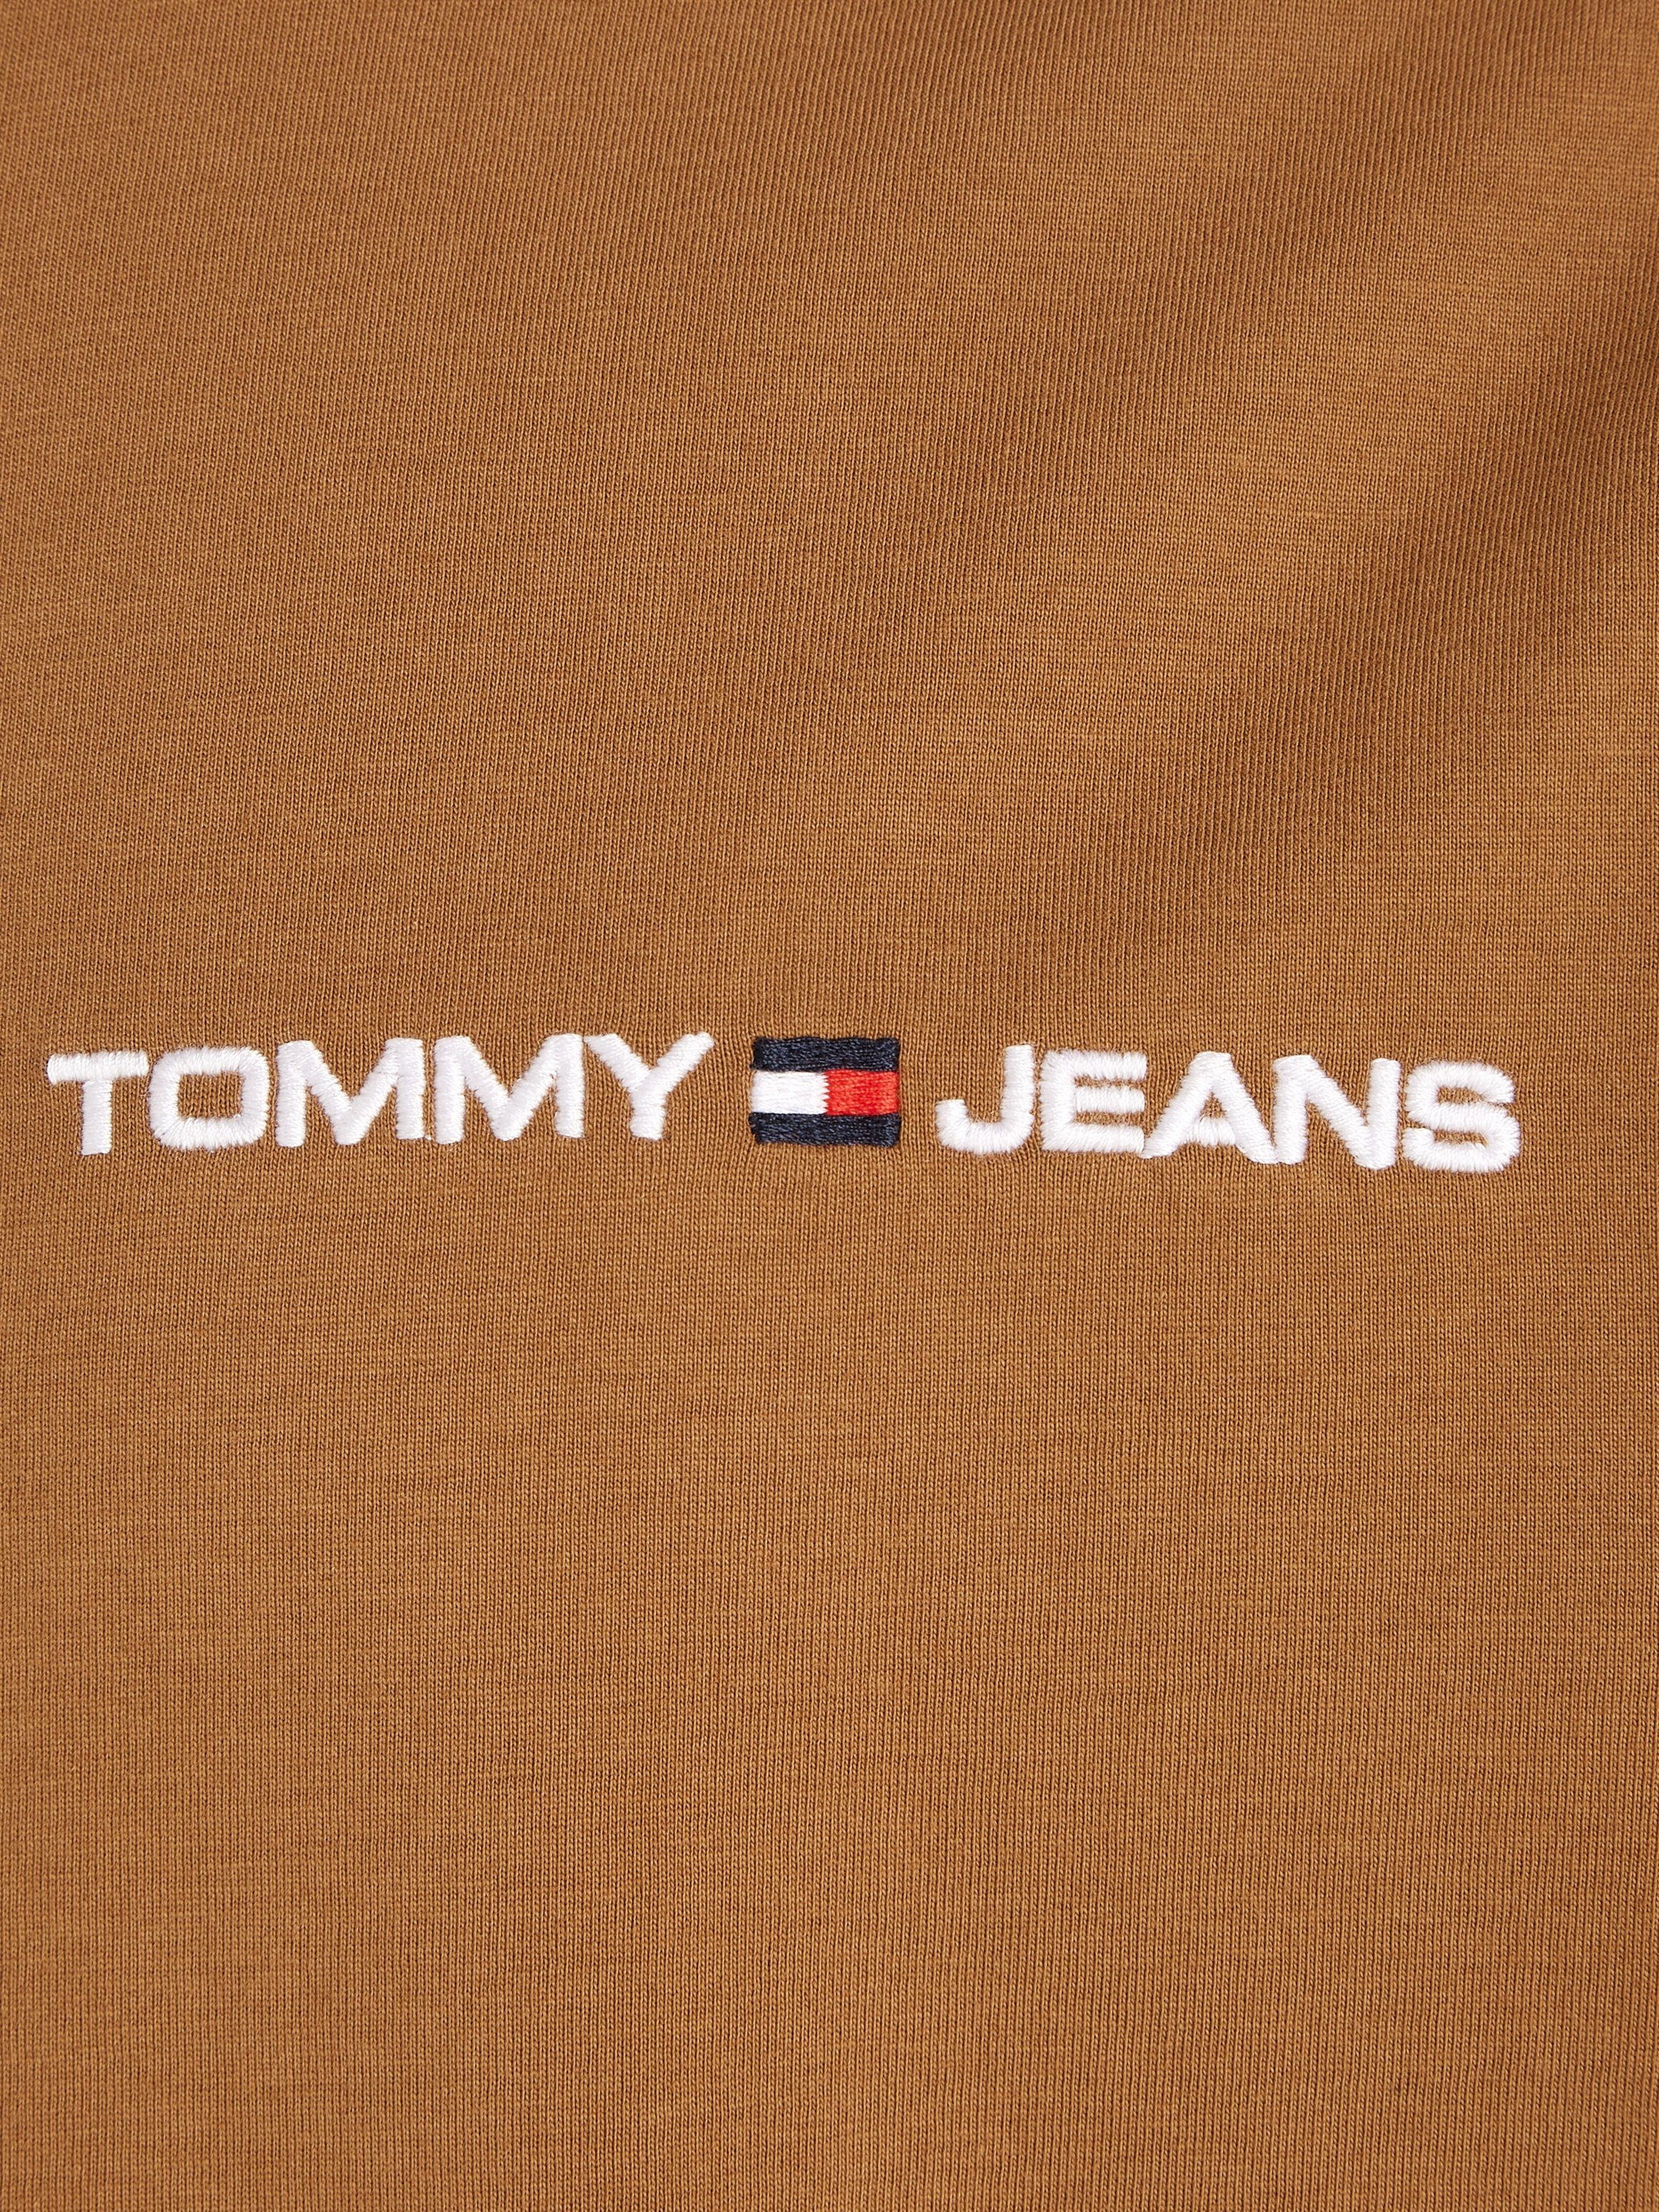 T-Shirt CHEST Khaki CLSC Tommy Desert Jeans LINEAR TEE TJM